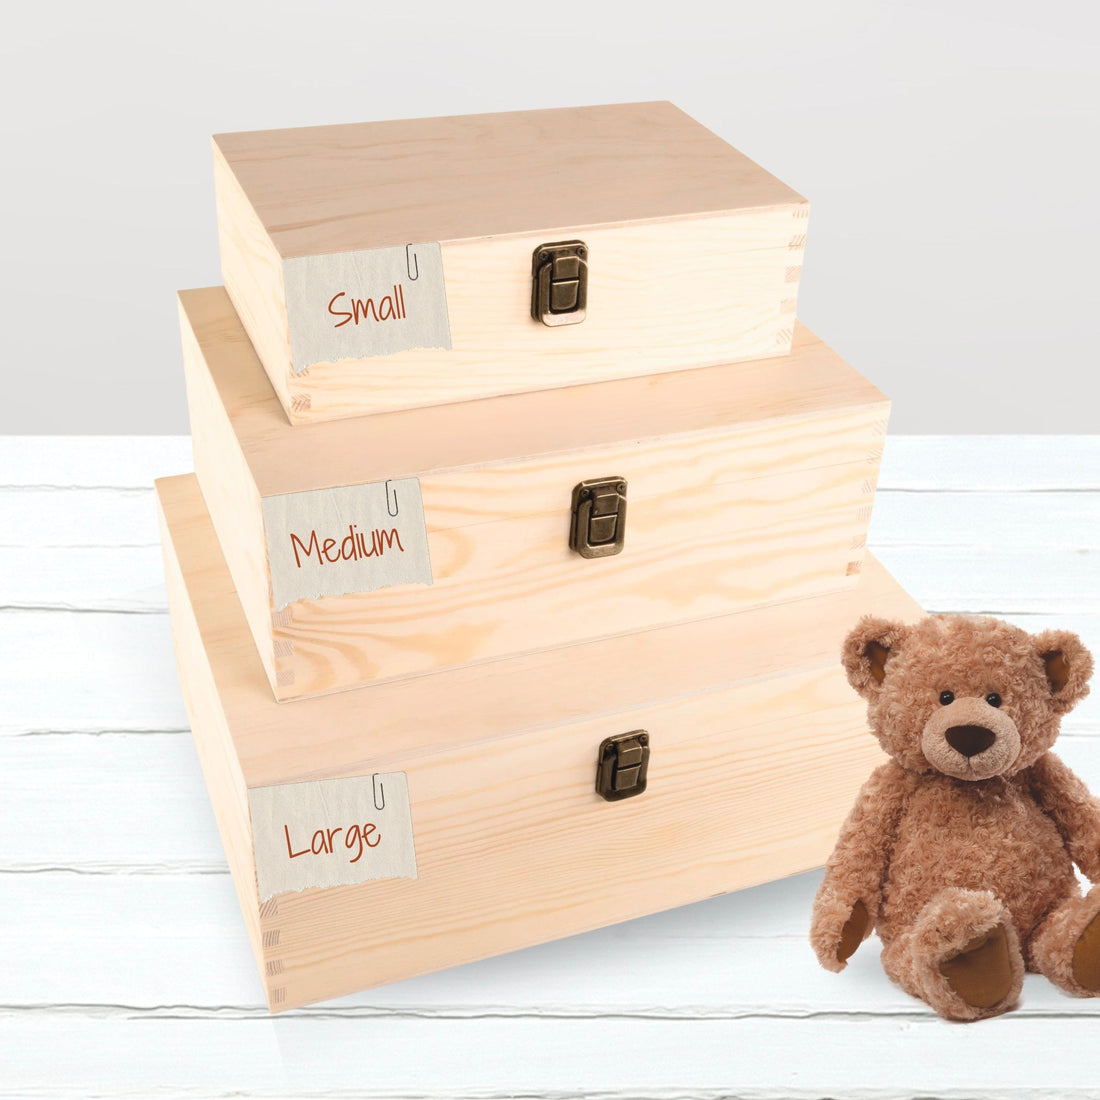 Personalised Baby Photo Wooden Keepsake Box, Custom Print Engraved Pine Memory Boxes, Treasure Storage, Nursery, Baptism First Birthday Gift